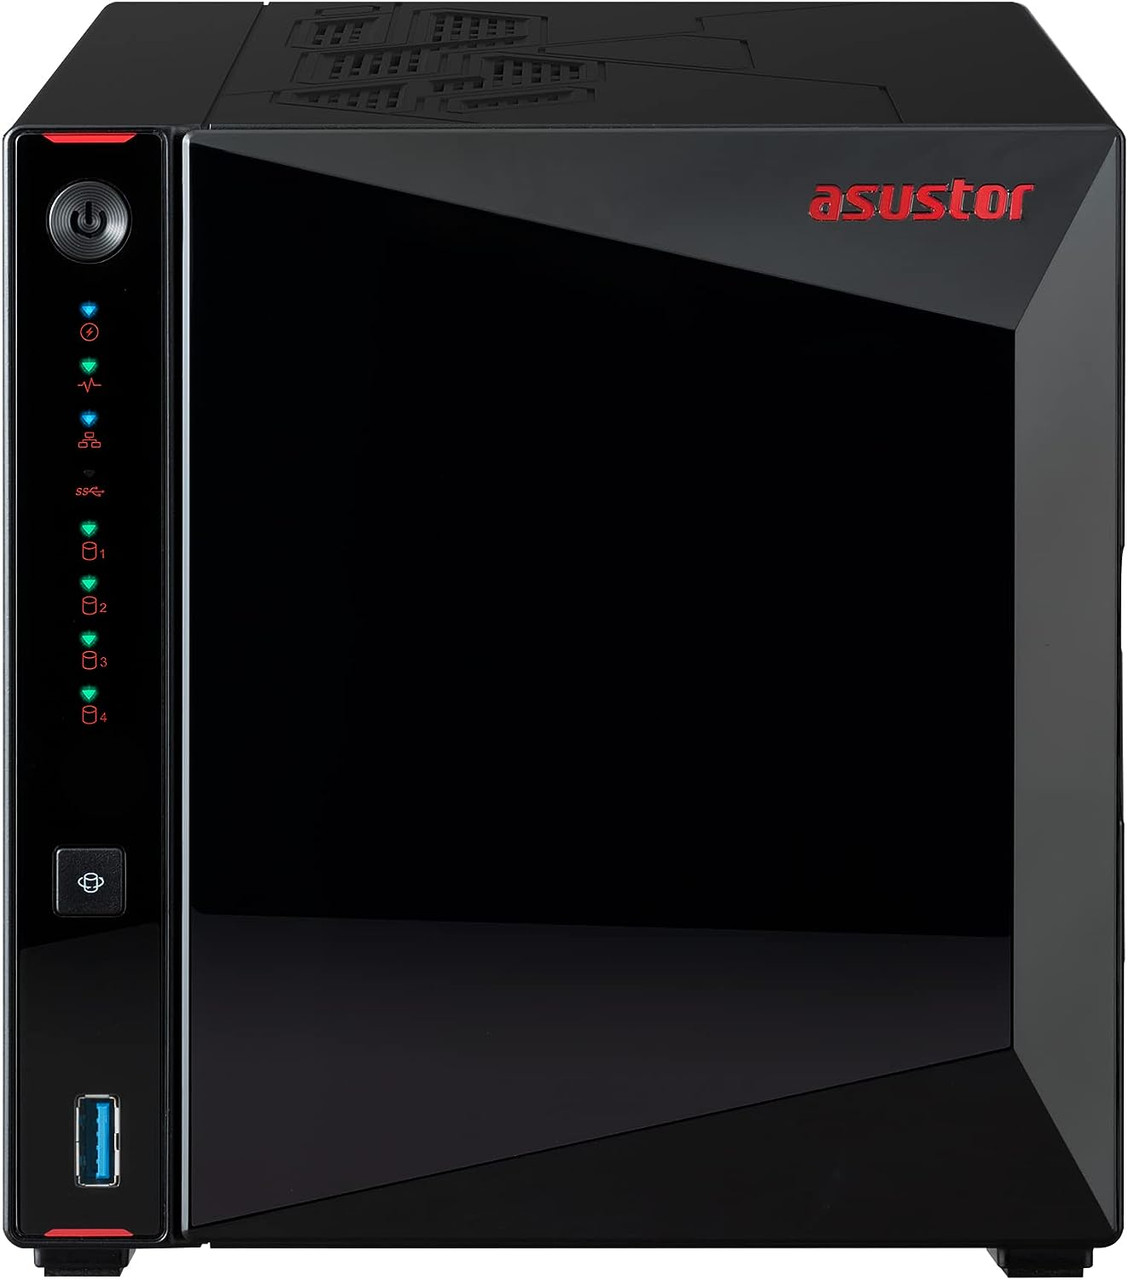 Asustor AS5404T Nimbustor 4 Gen2  4 Bay NAS,Quad-Core 2.0GHz CPU,Dual 2.5GbE Ports,4GB DDR4,4x M.2 SSD Slots (Diskless)